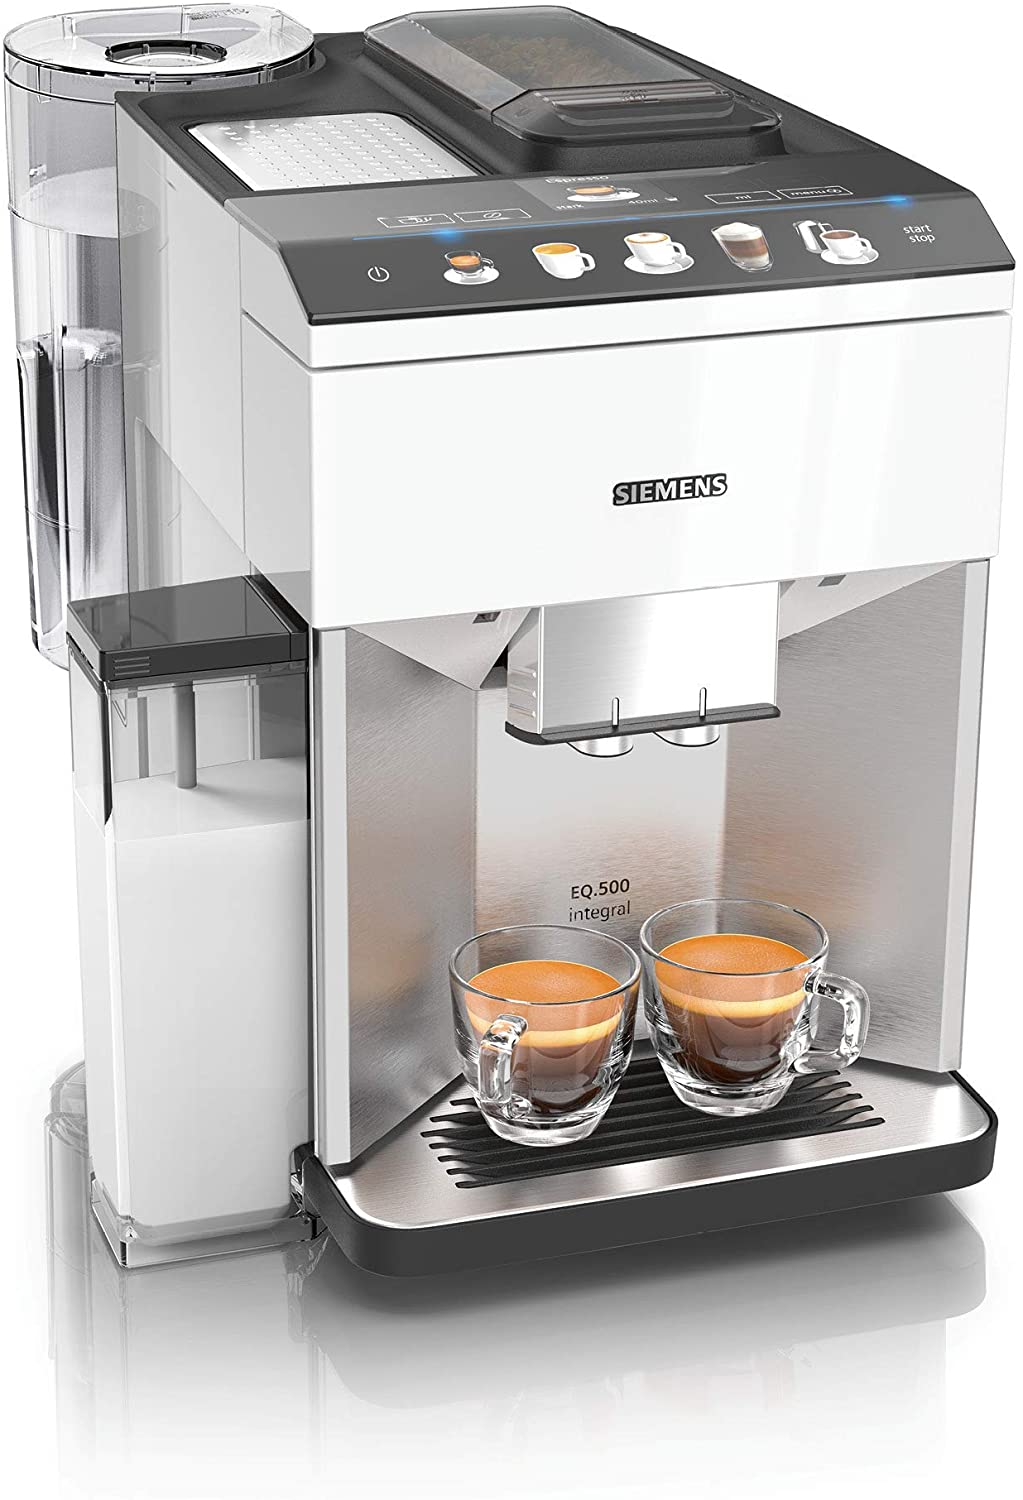 Siemens EQ.500 Integral Fully Automatic Coffee Machine